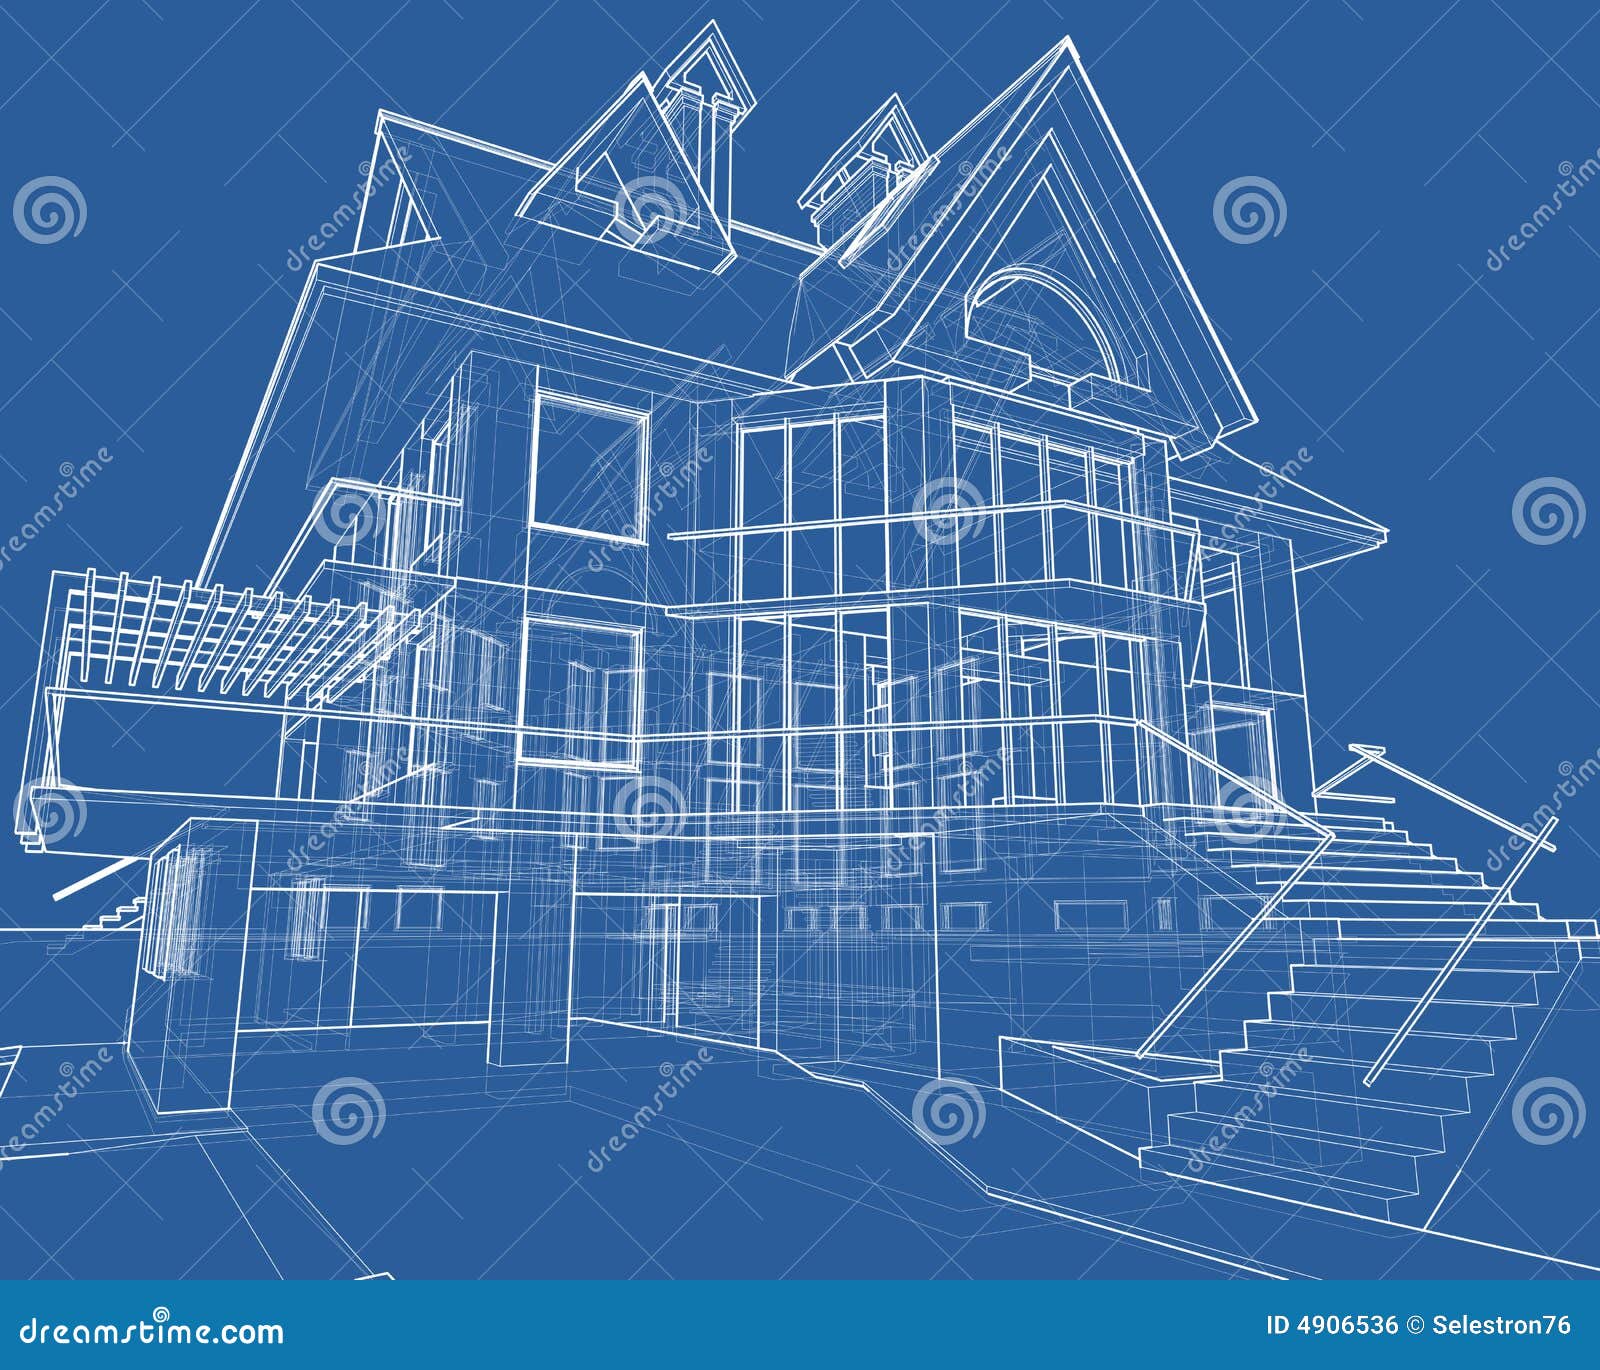 House: technical draw stock illustration. Illustration of construction